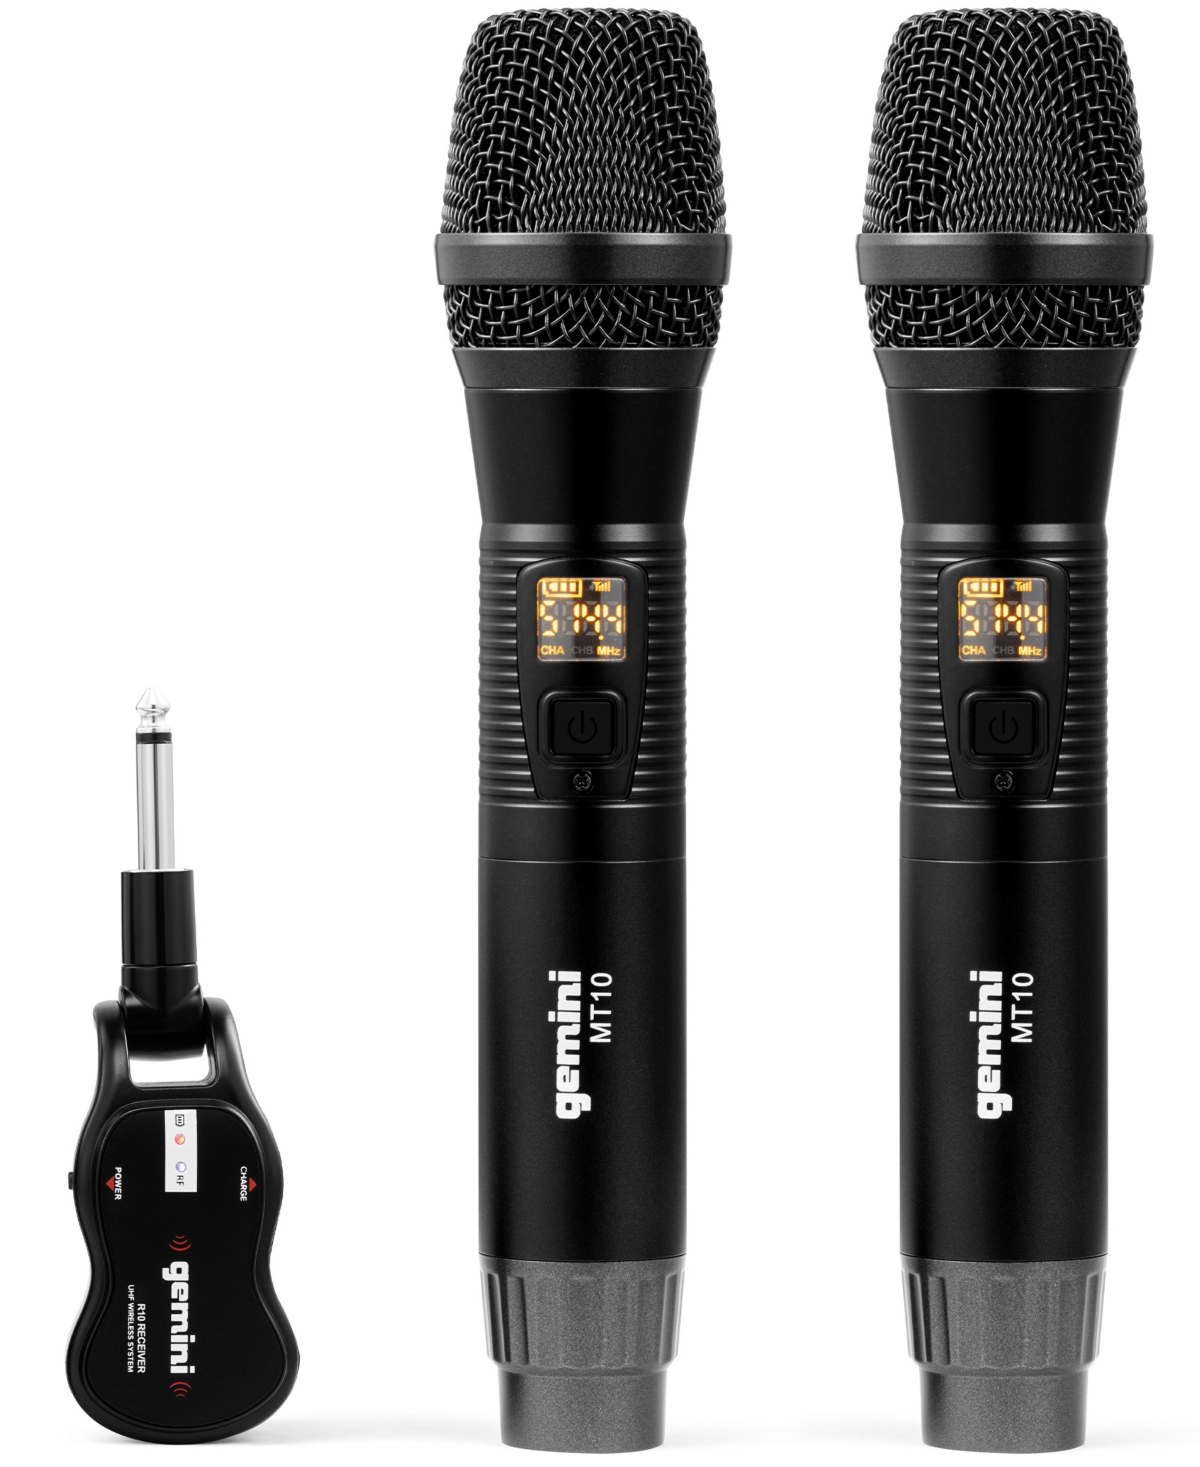 Gemini Dual Handheld Wireless Uhf Microphone System, Set Of 2 In Black